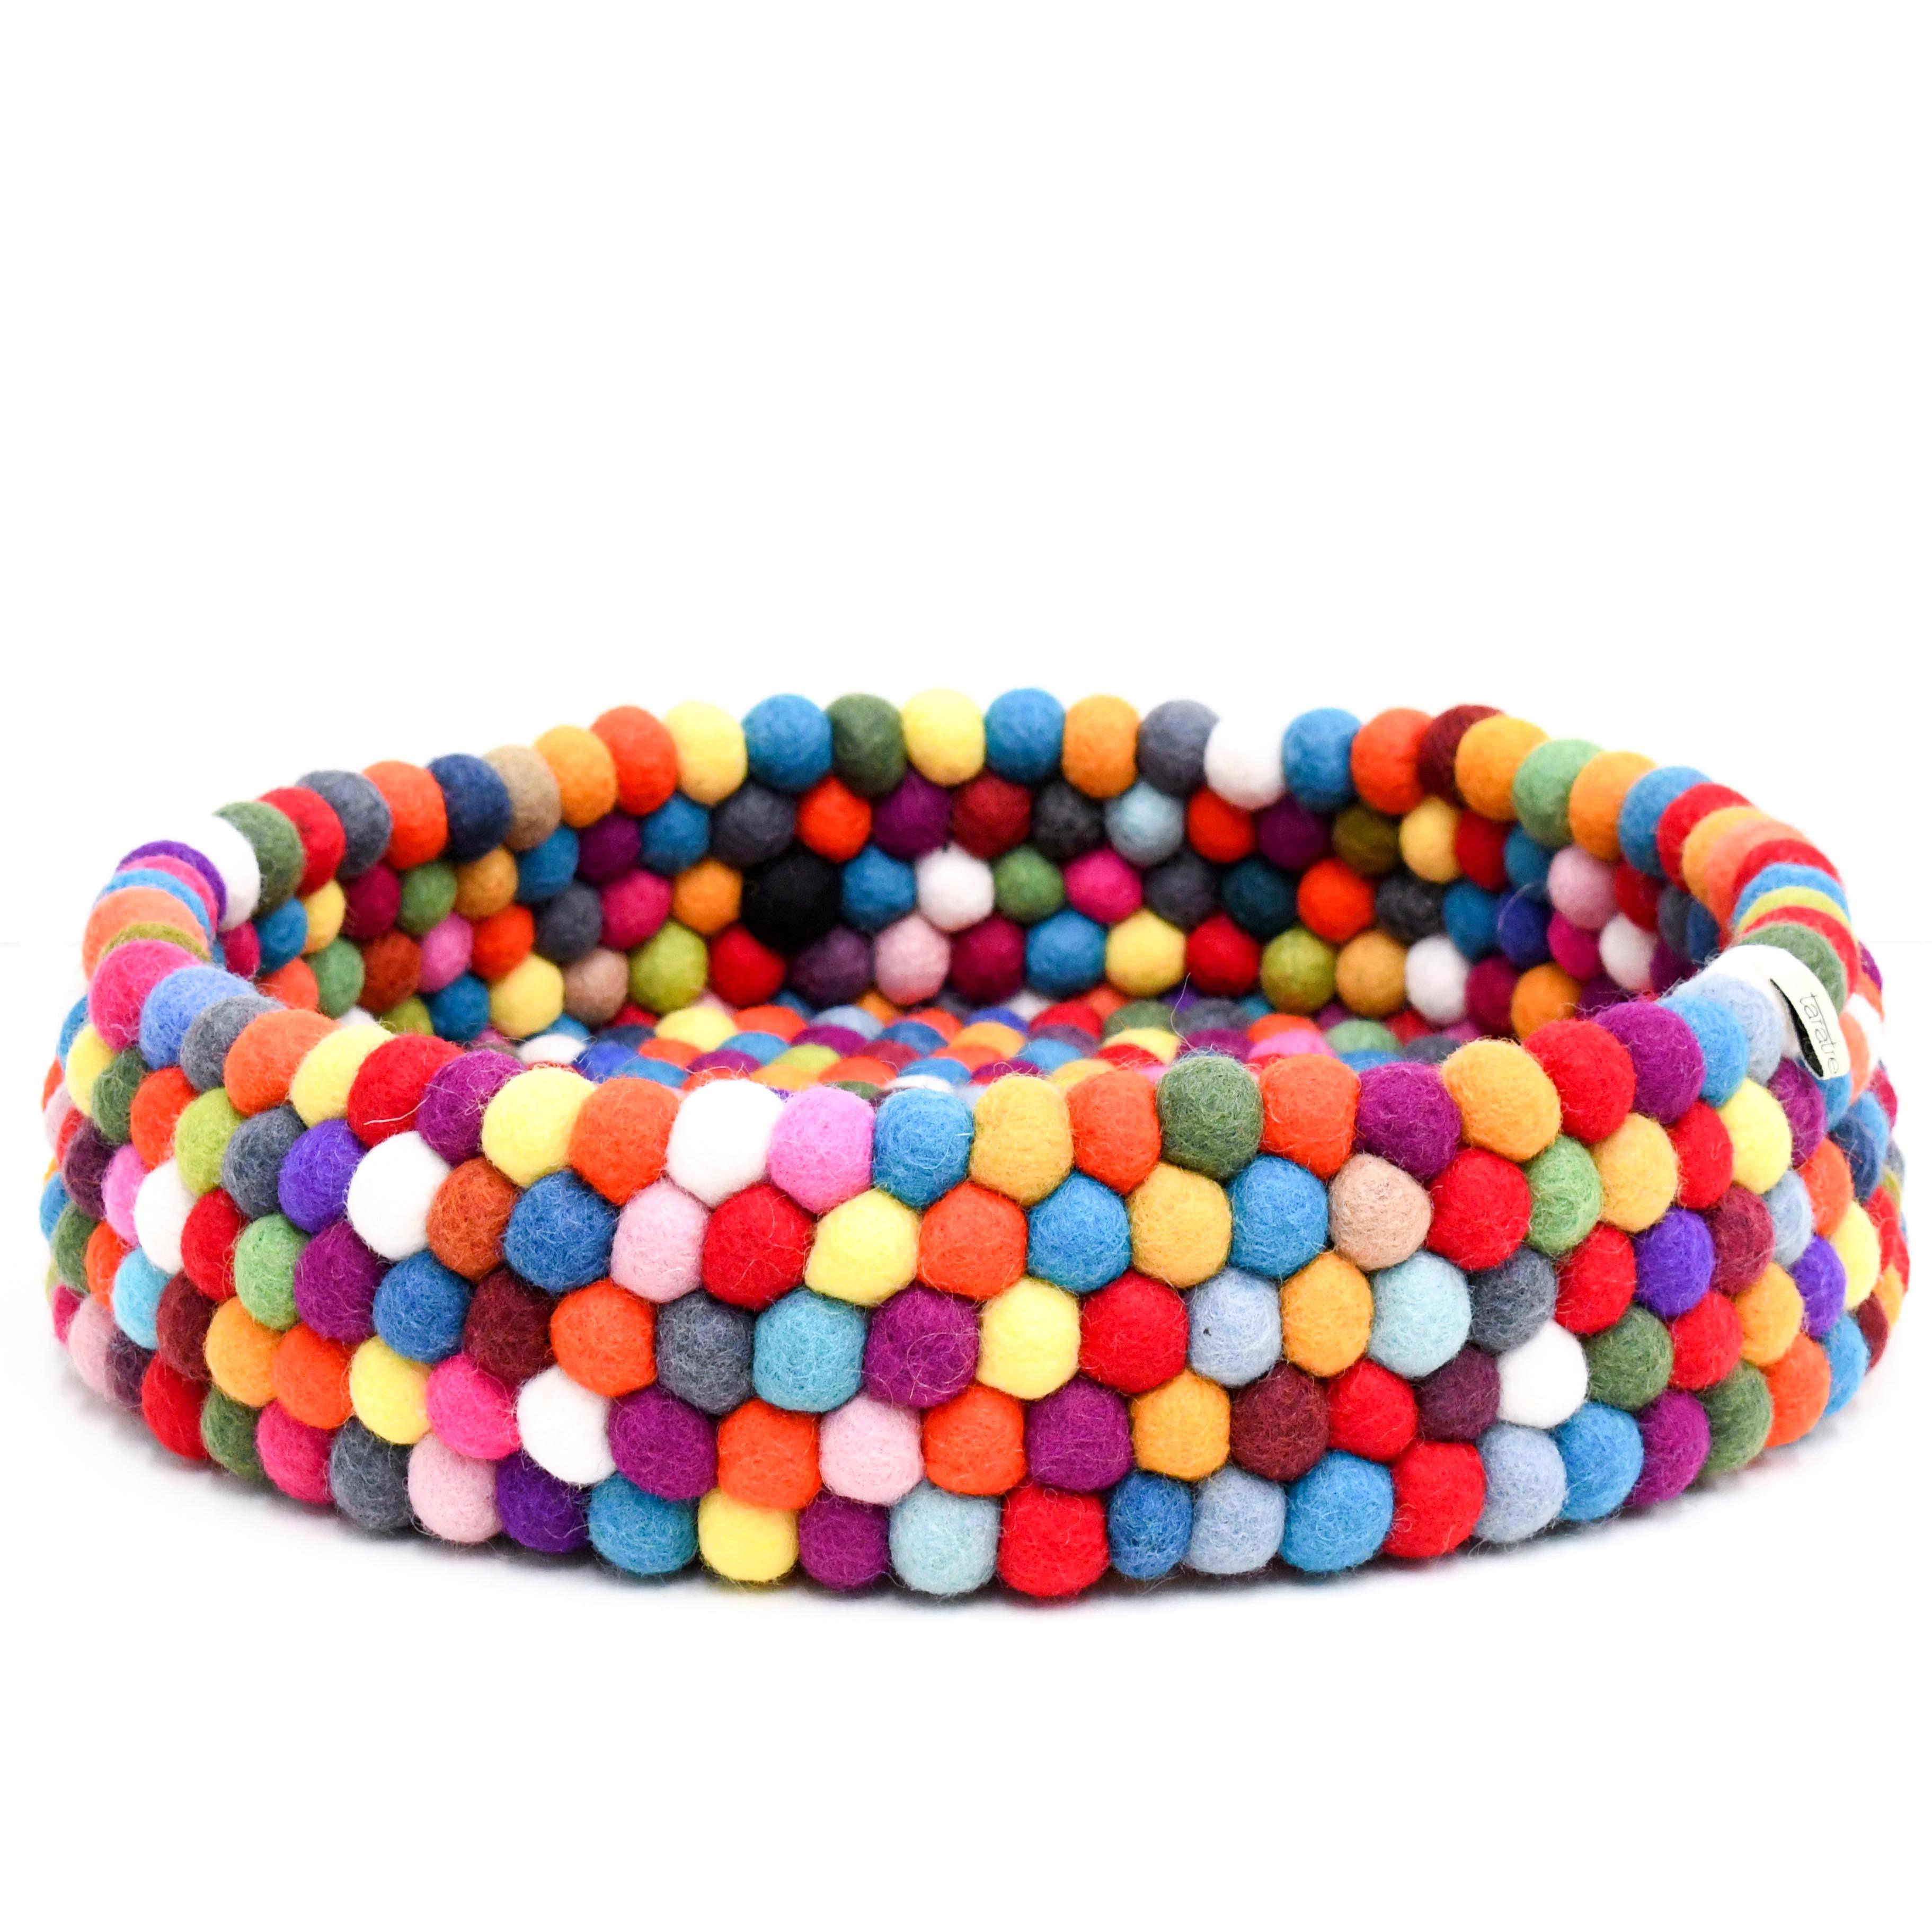 Colourful Felt Ball Basket for Cats - Tara Treasures